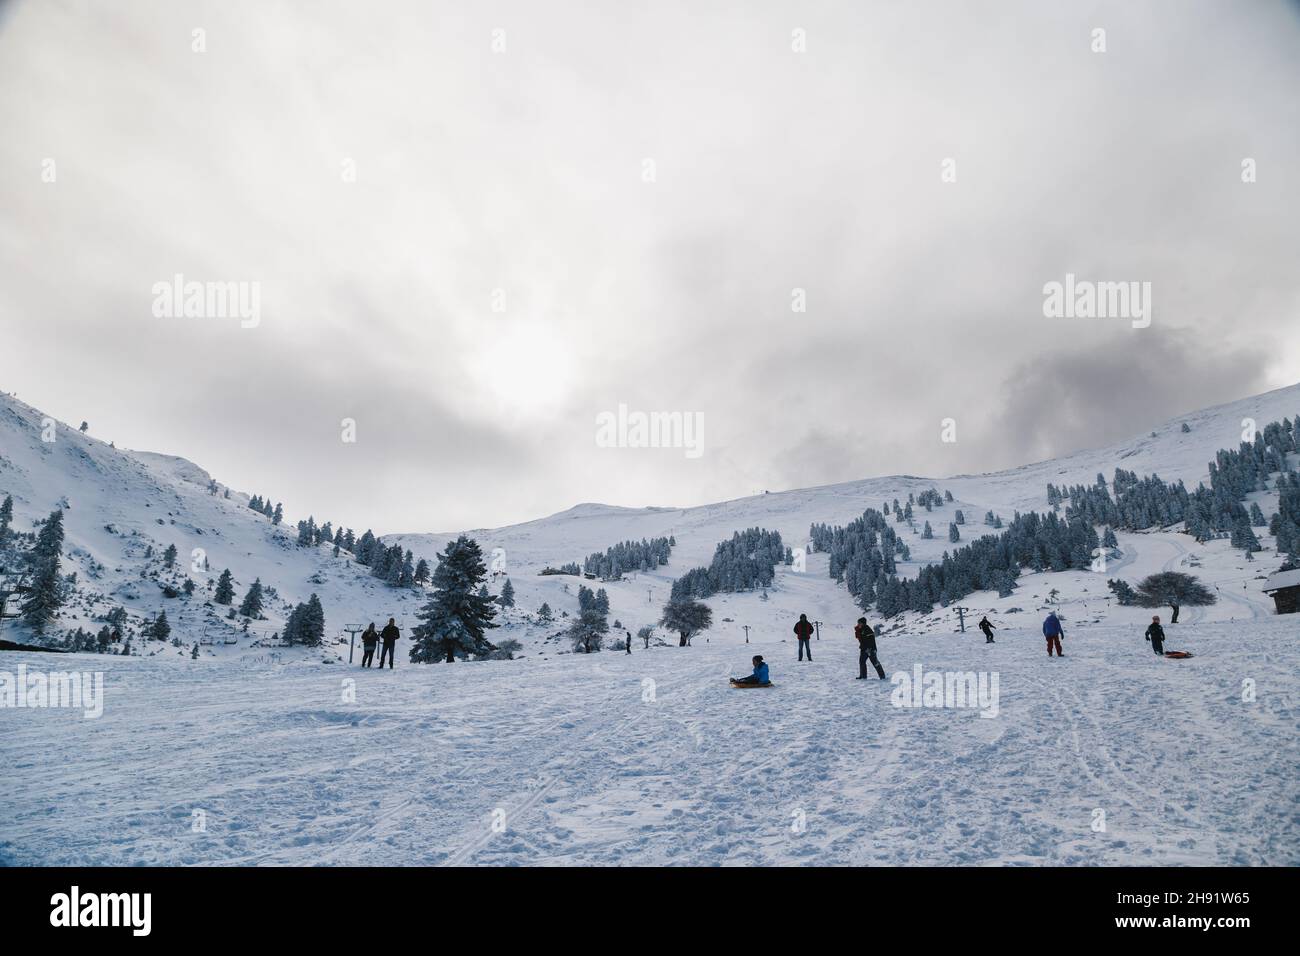 Sleigh Ski Lift High Resolution Stock Photography and Images - Alamy